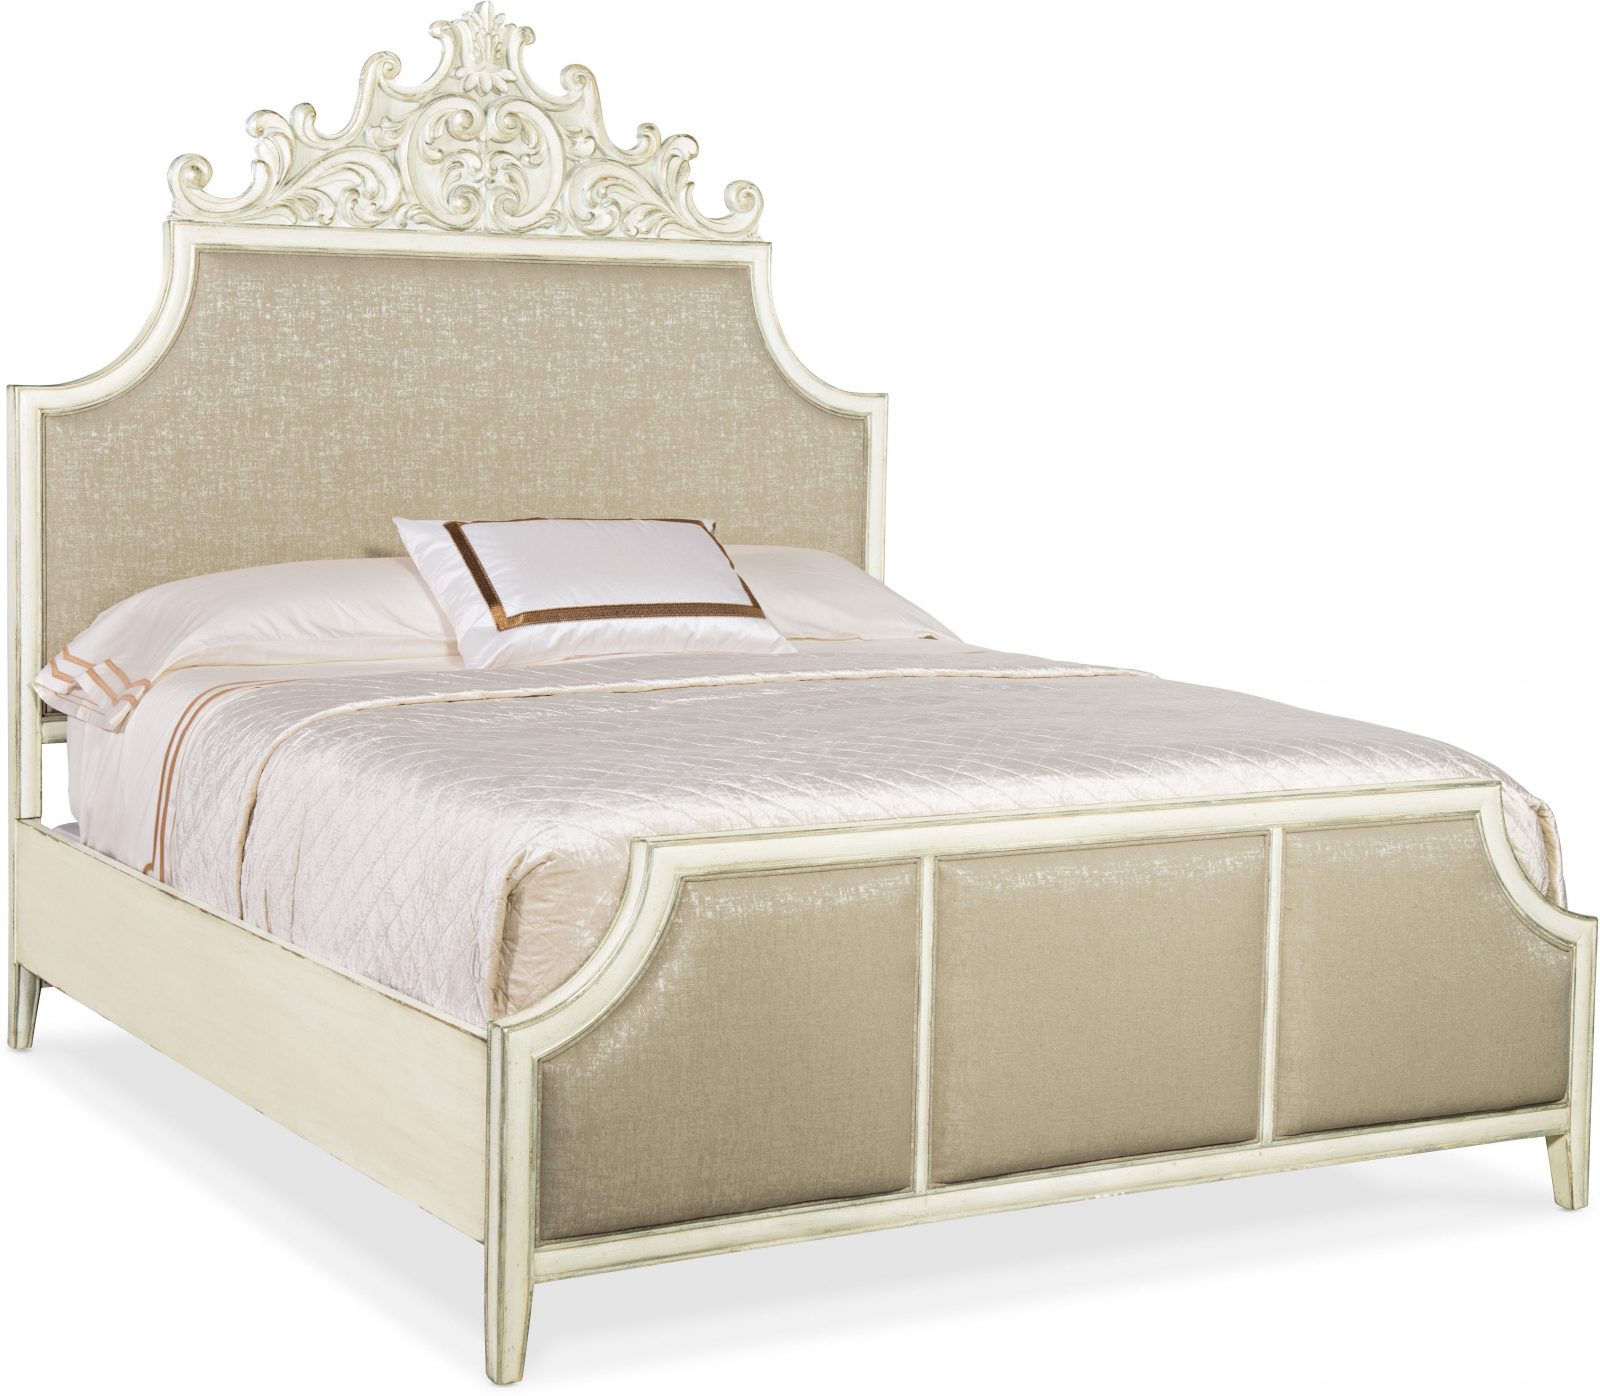 Sanctuary Anastasie upholstered bed